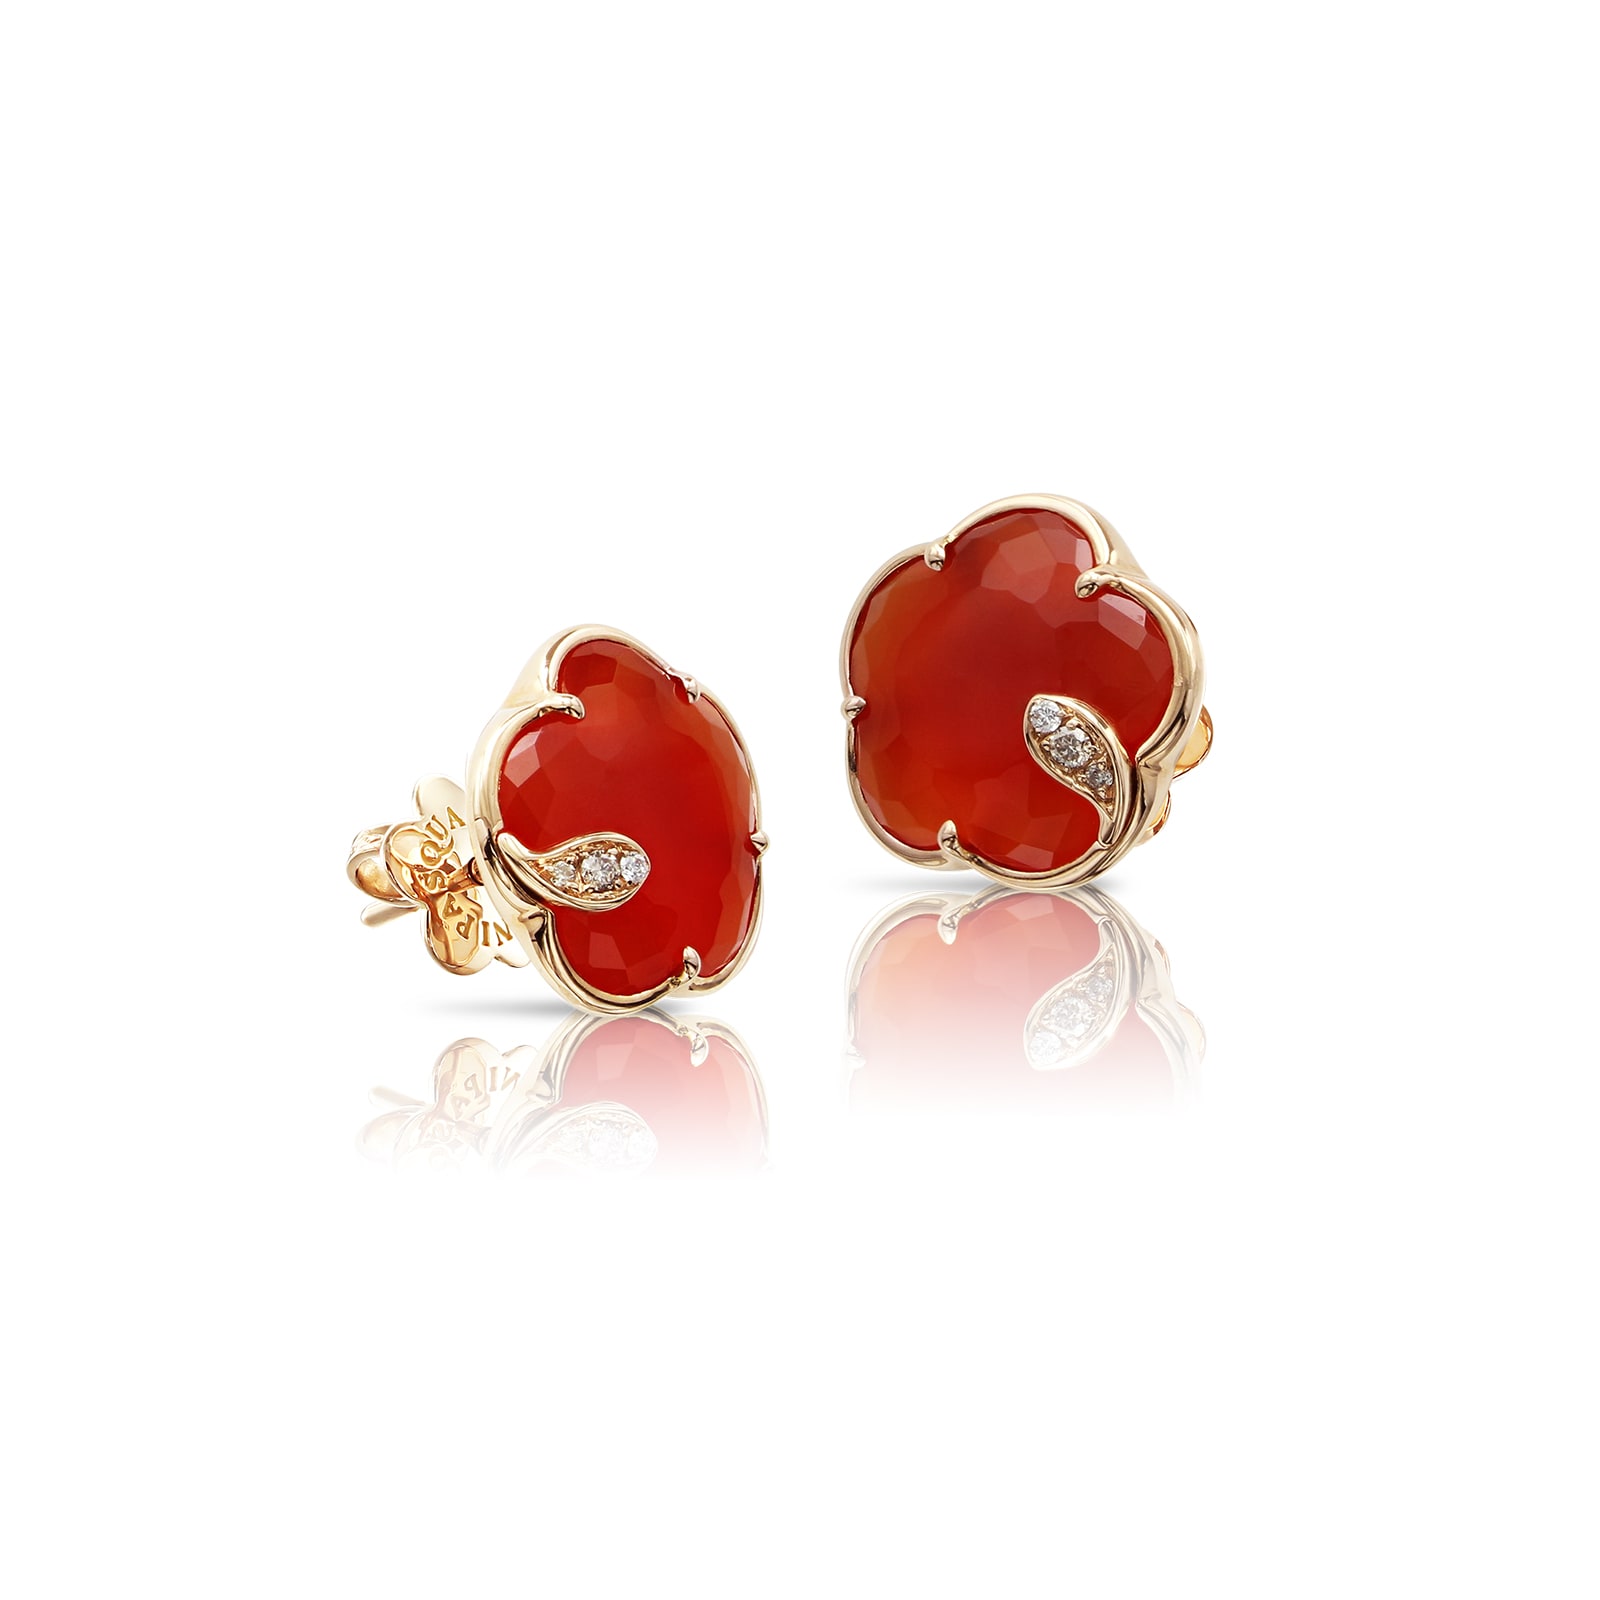 Petit Joli Earrings in 18ct Rose Gold with Carnelian and Diamonds